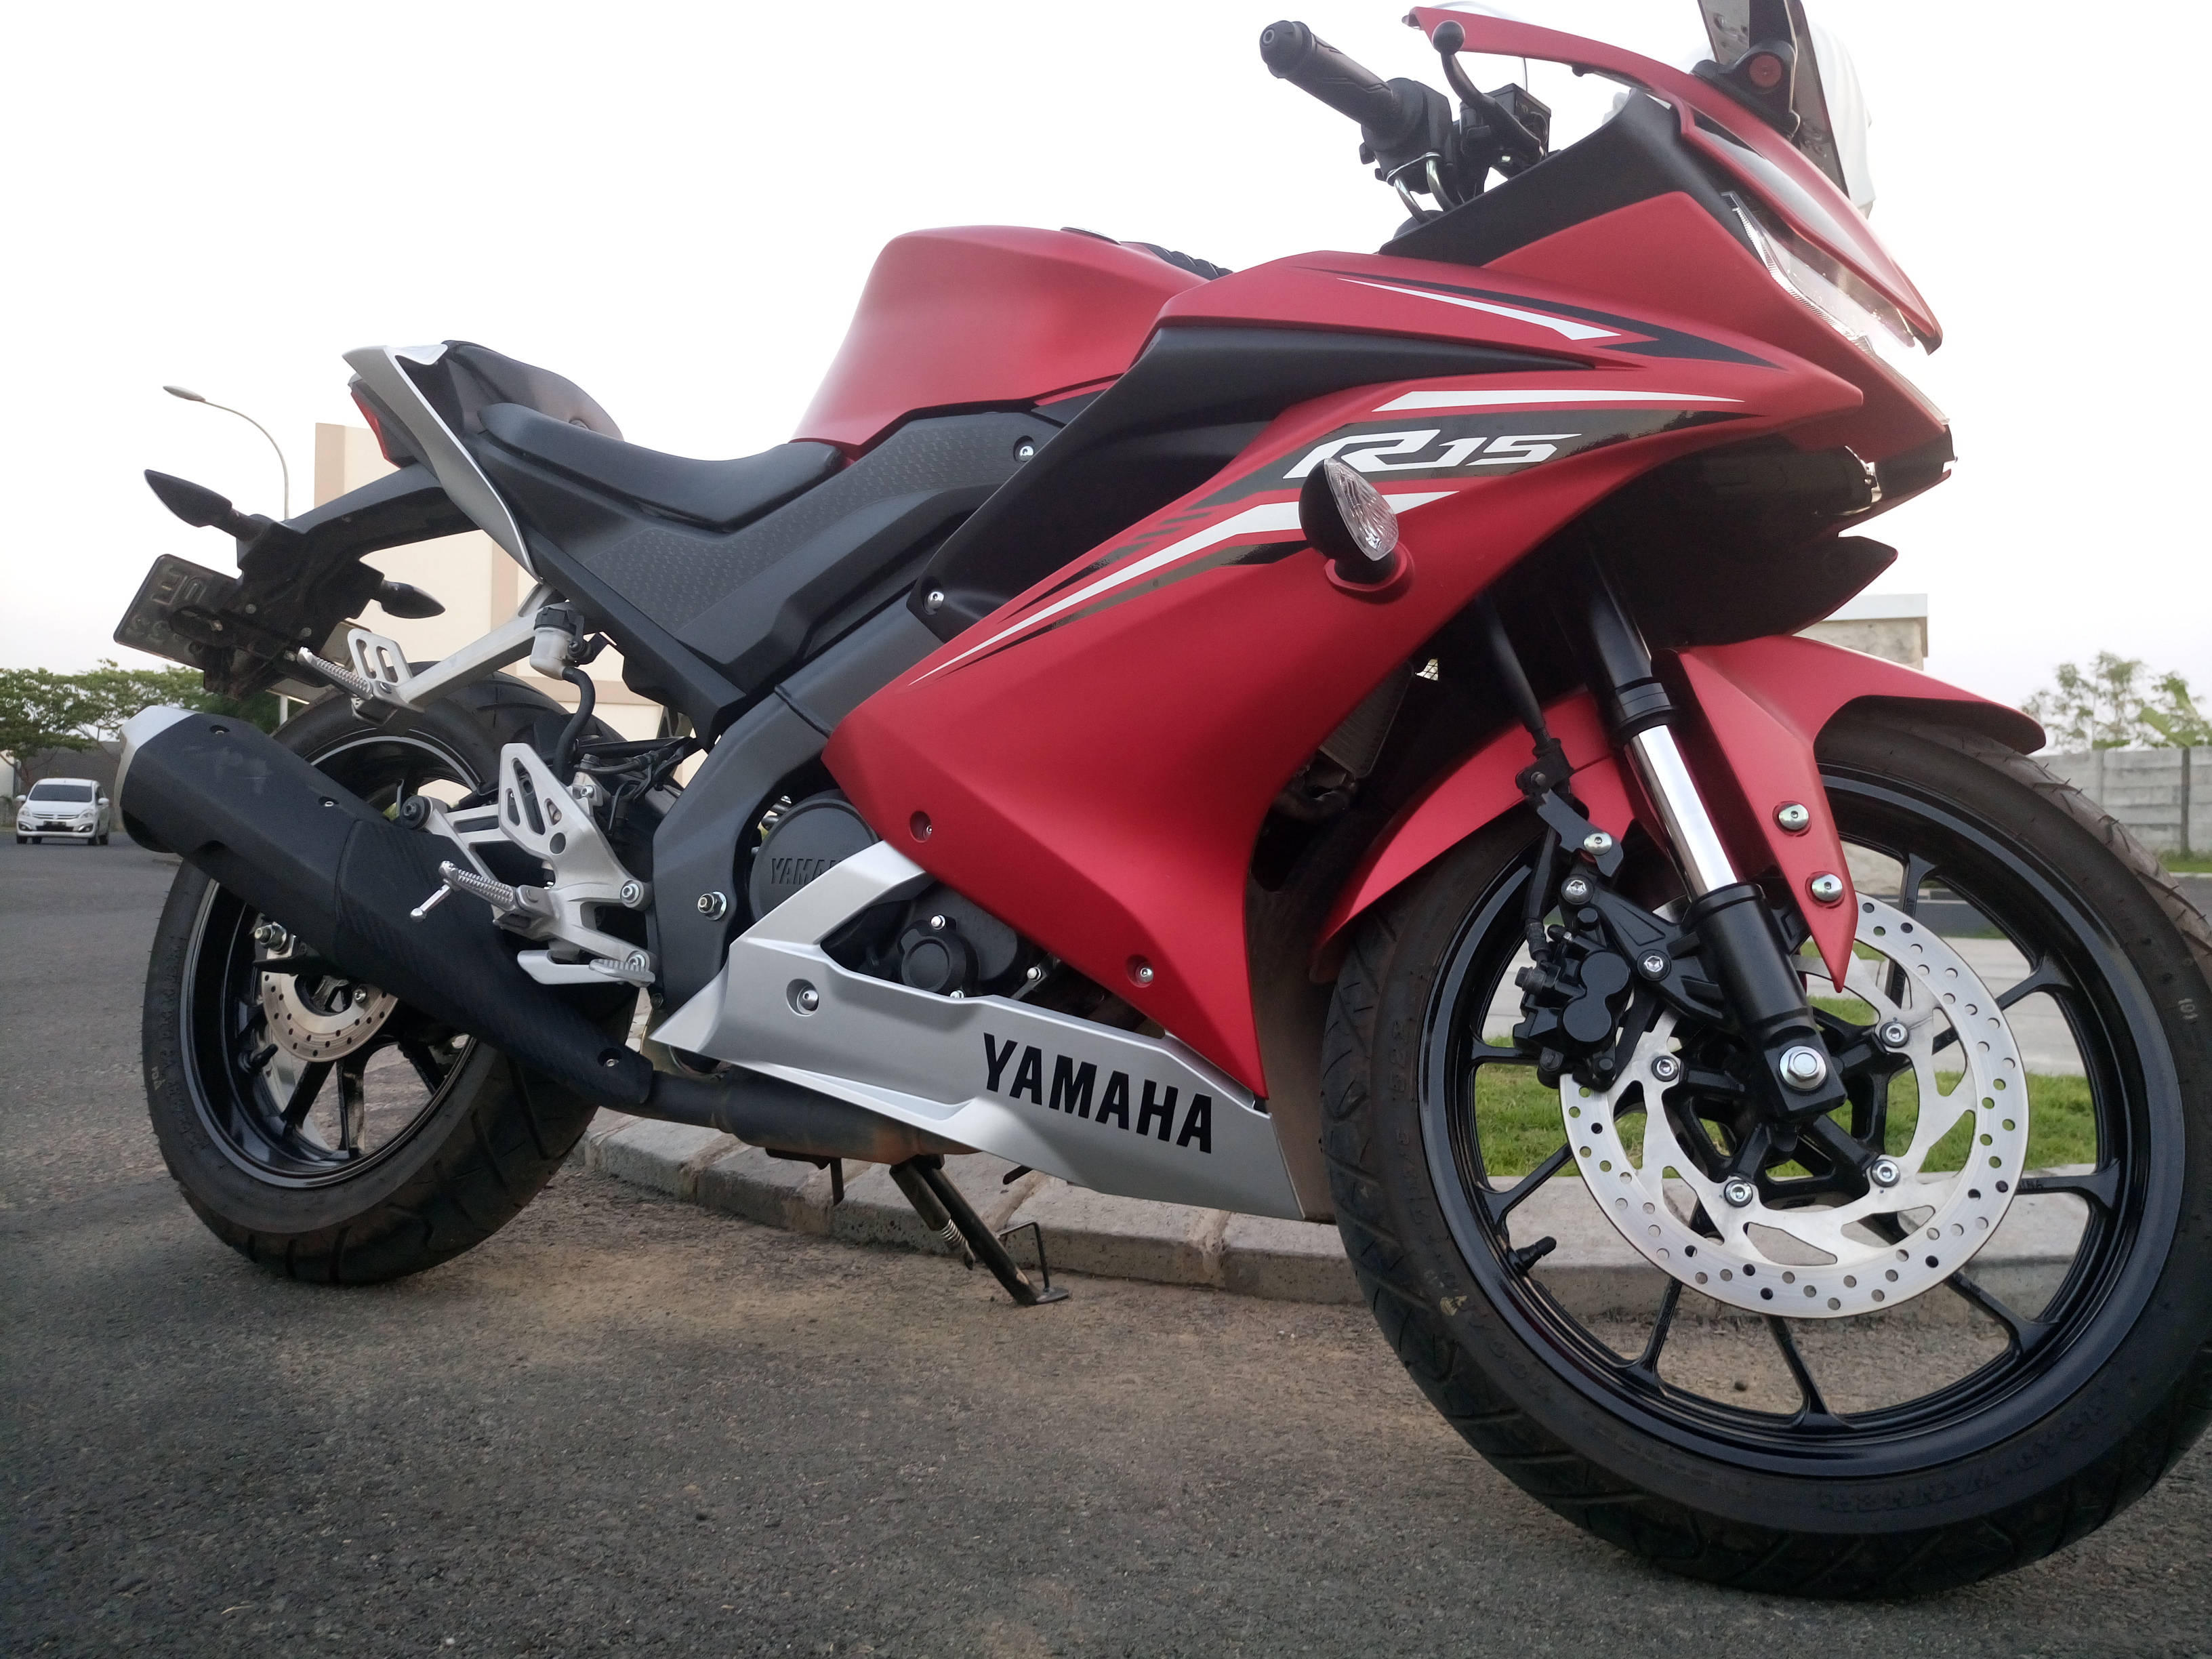 Test Ride Harian Yamaha All New R15 Sport 150cc Yang Berasa Moge